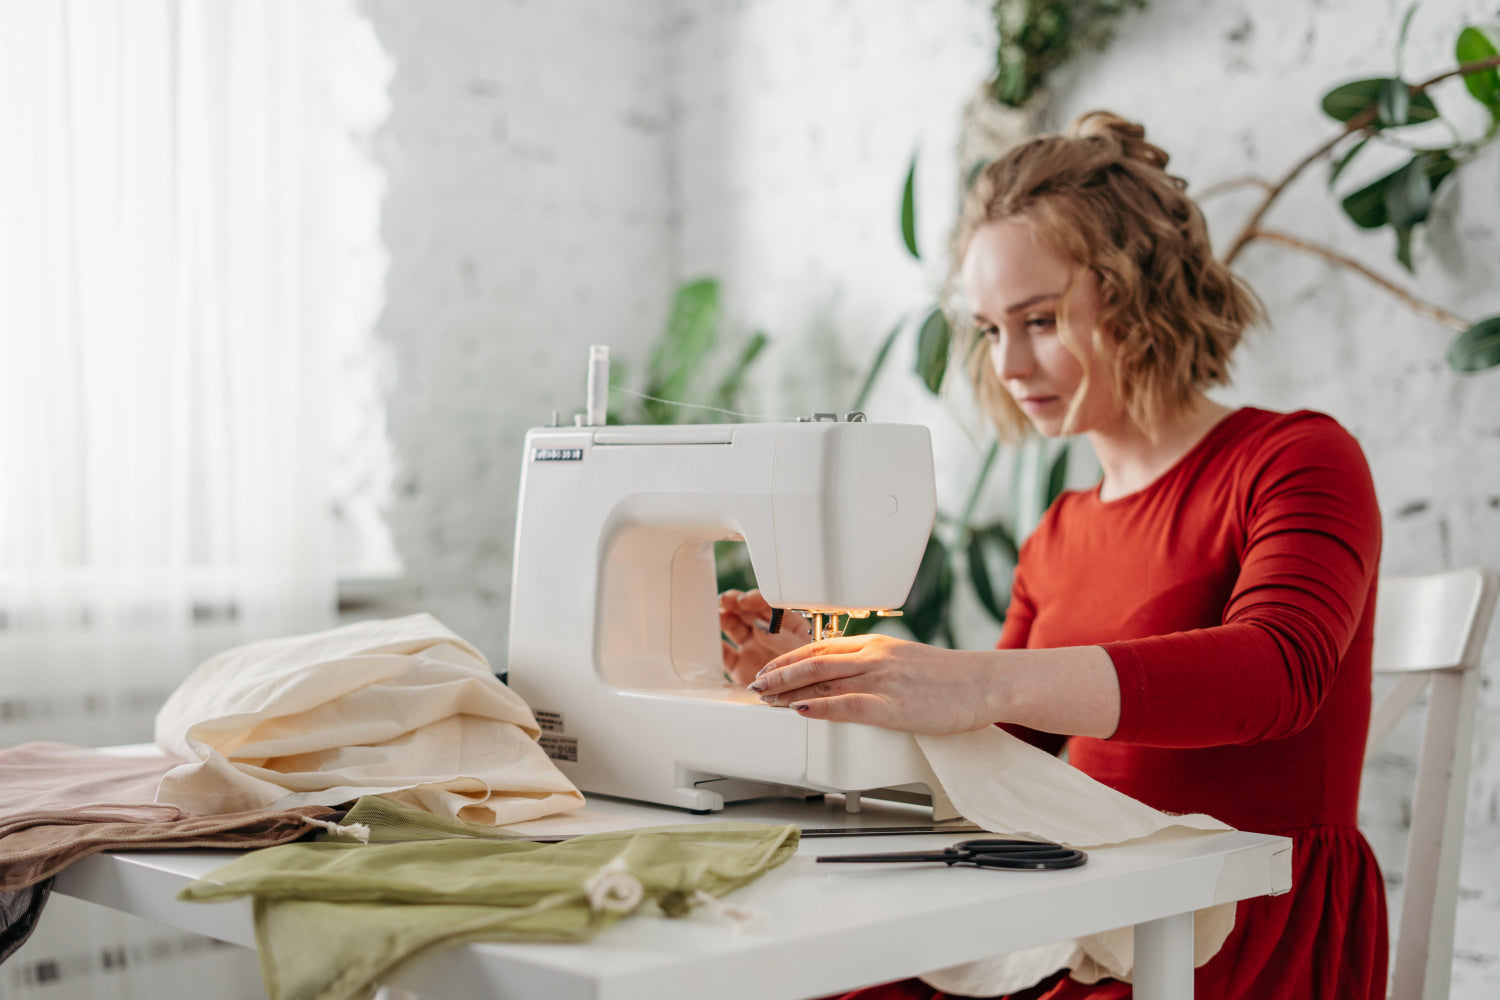 Woman sits at sewing machine making a garment